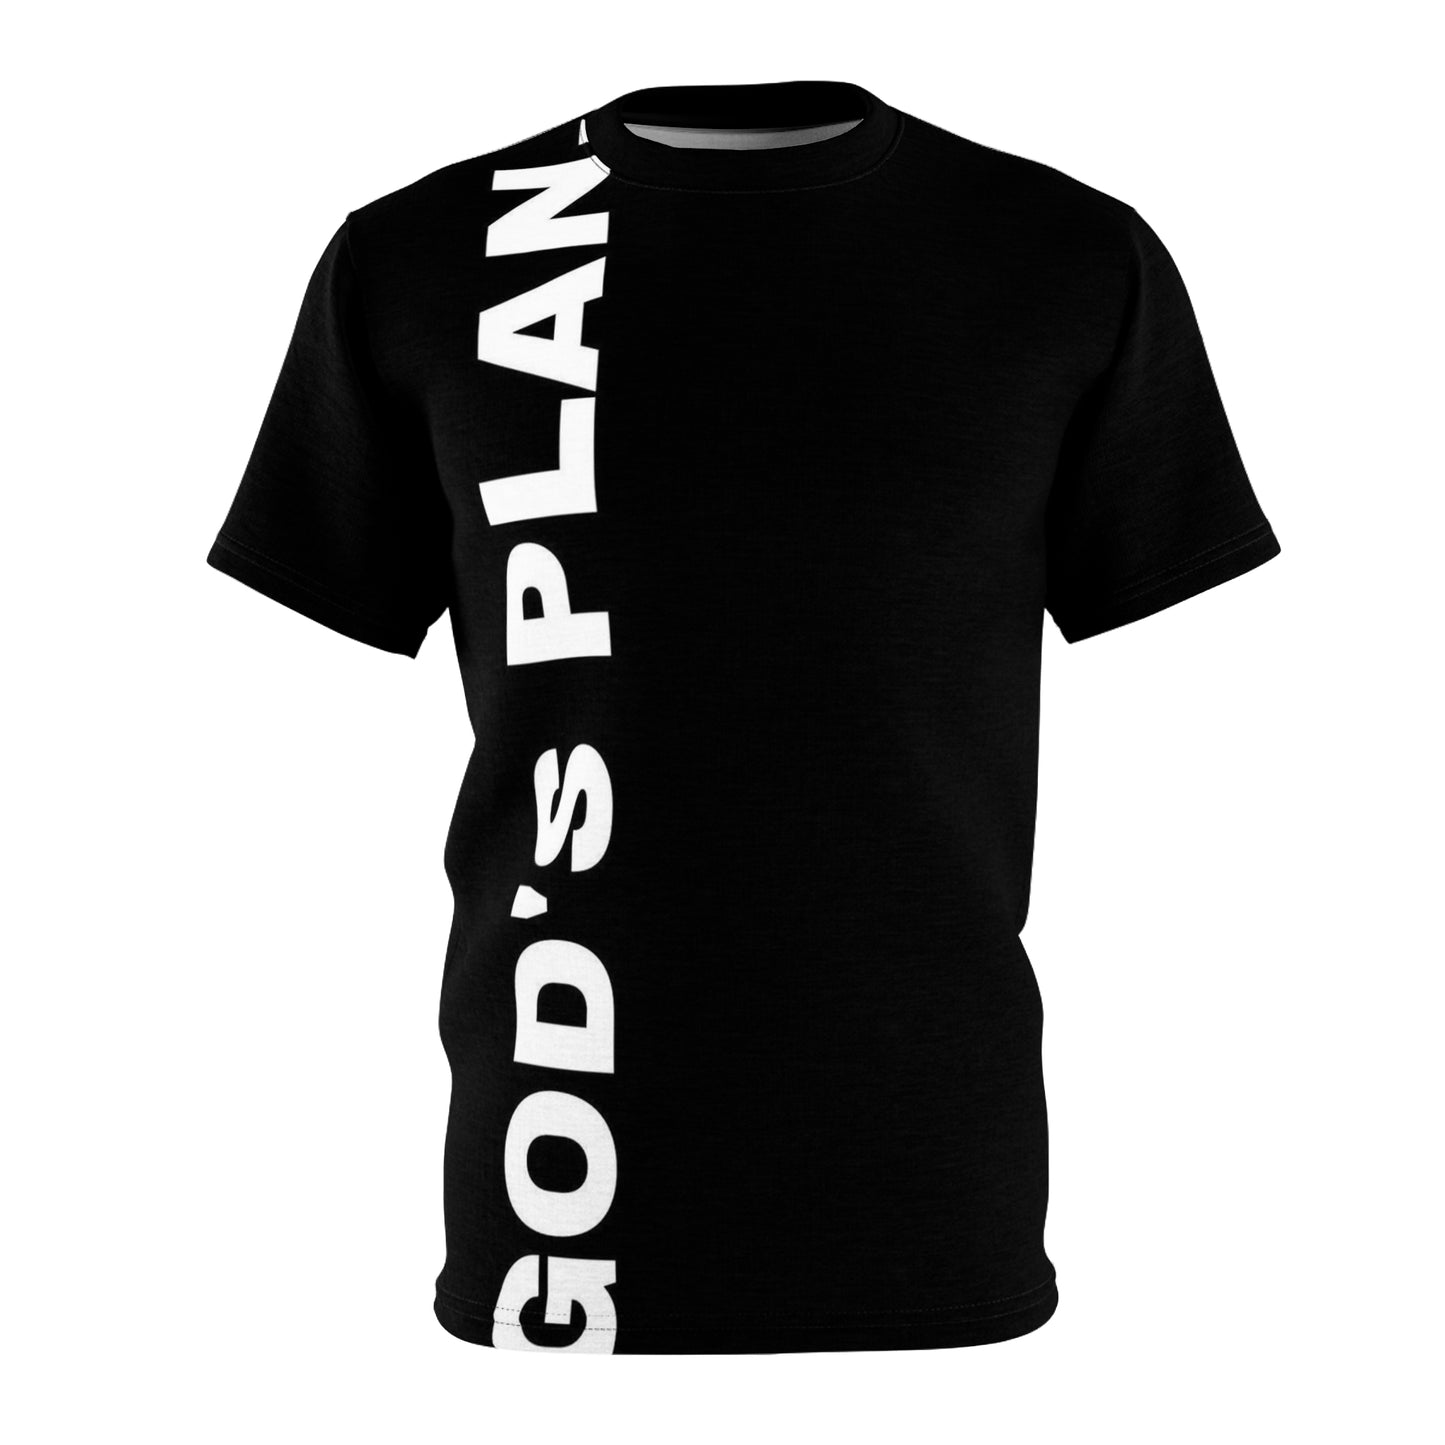 God's plan t-shirt